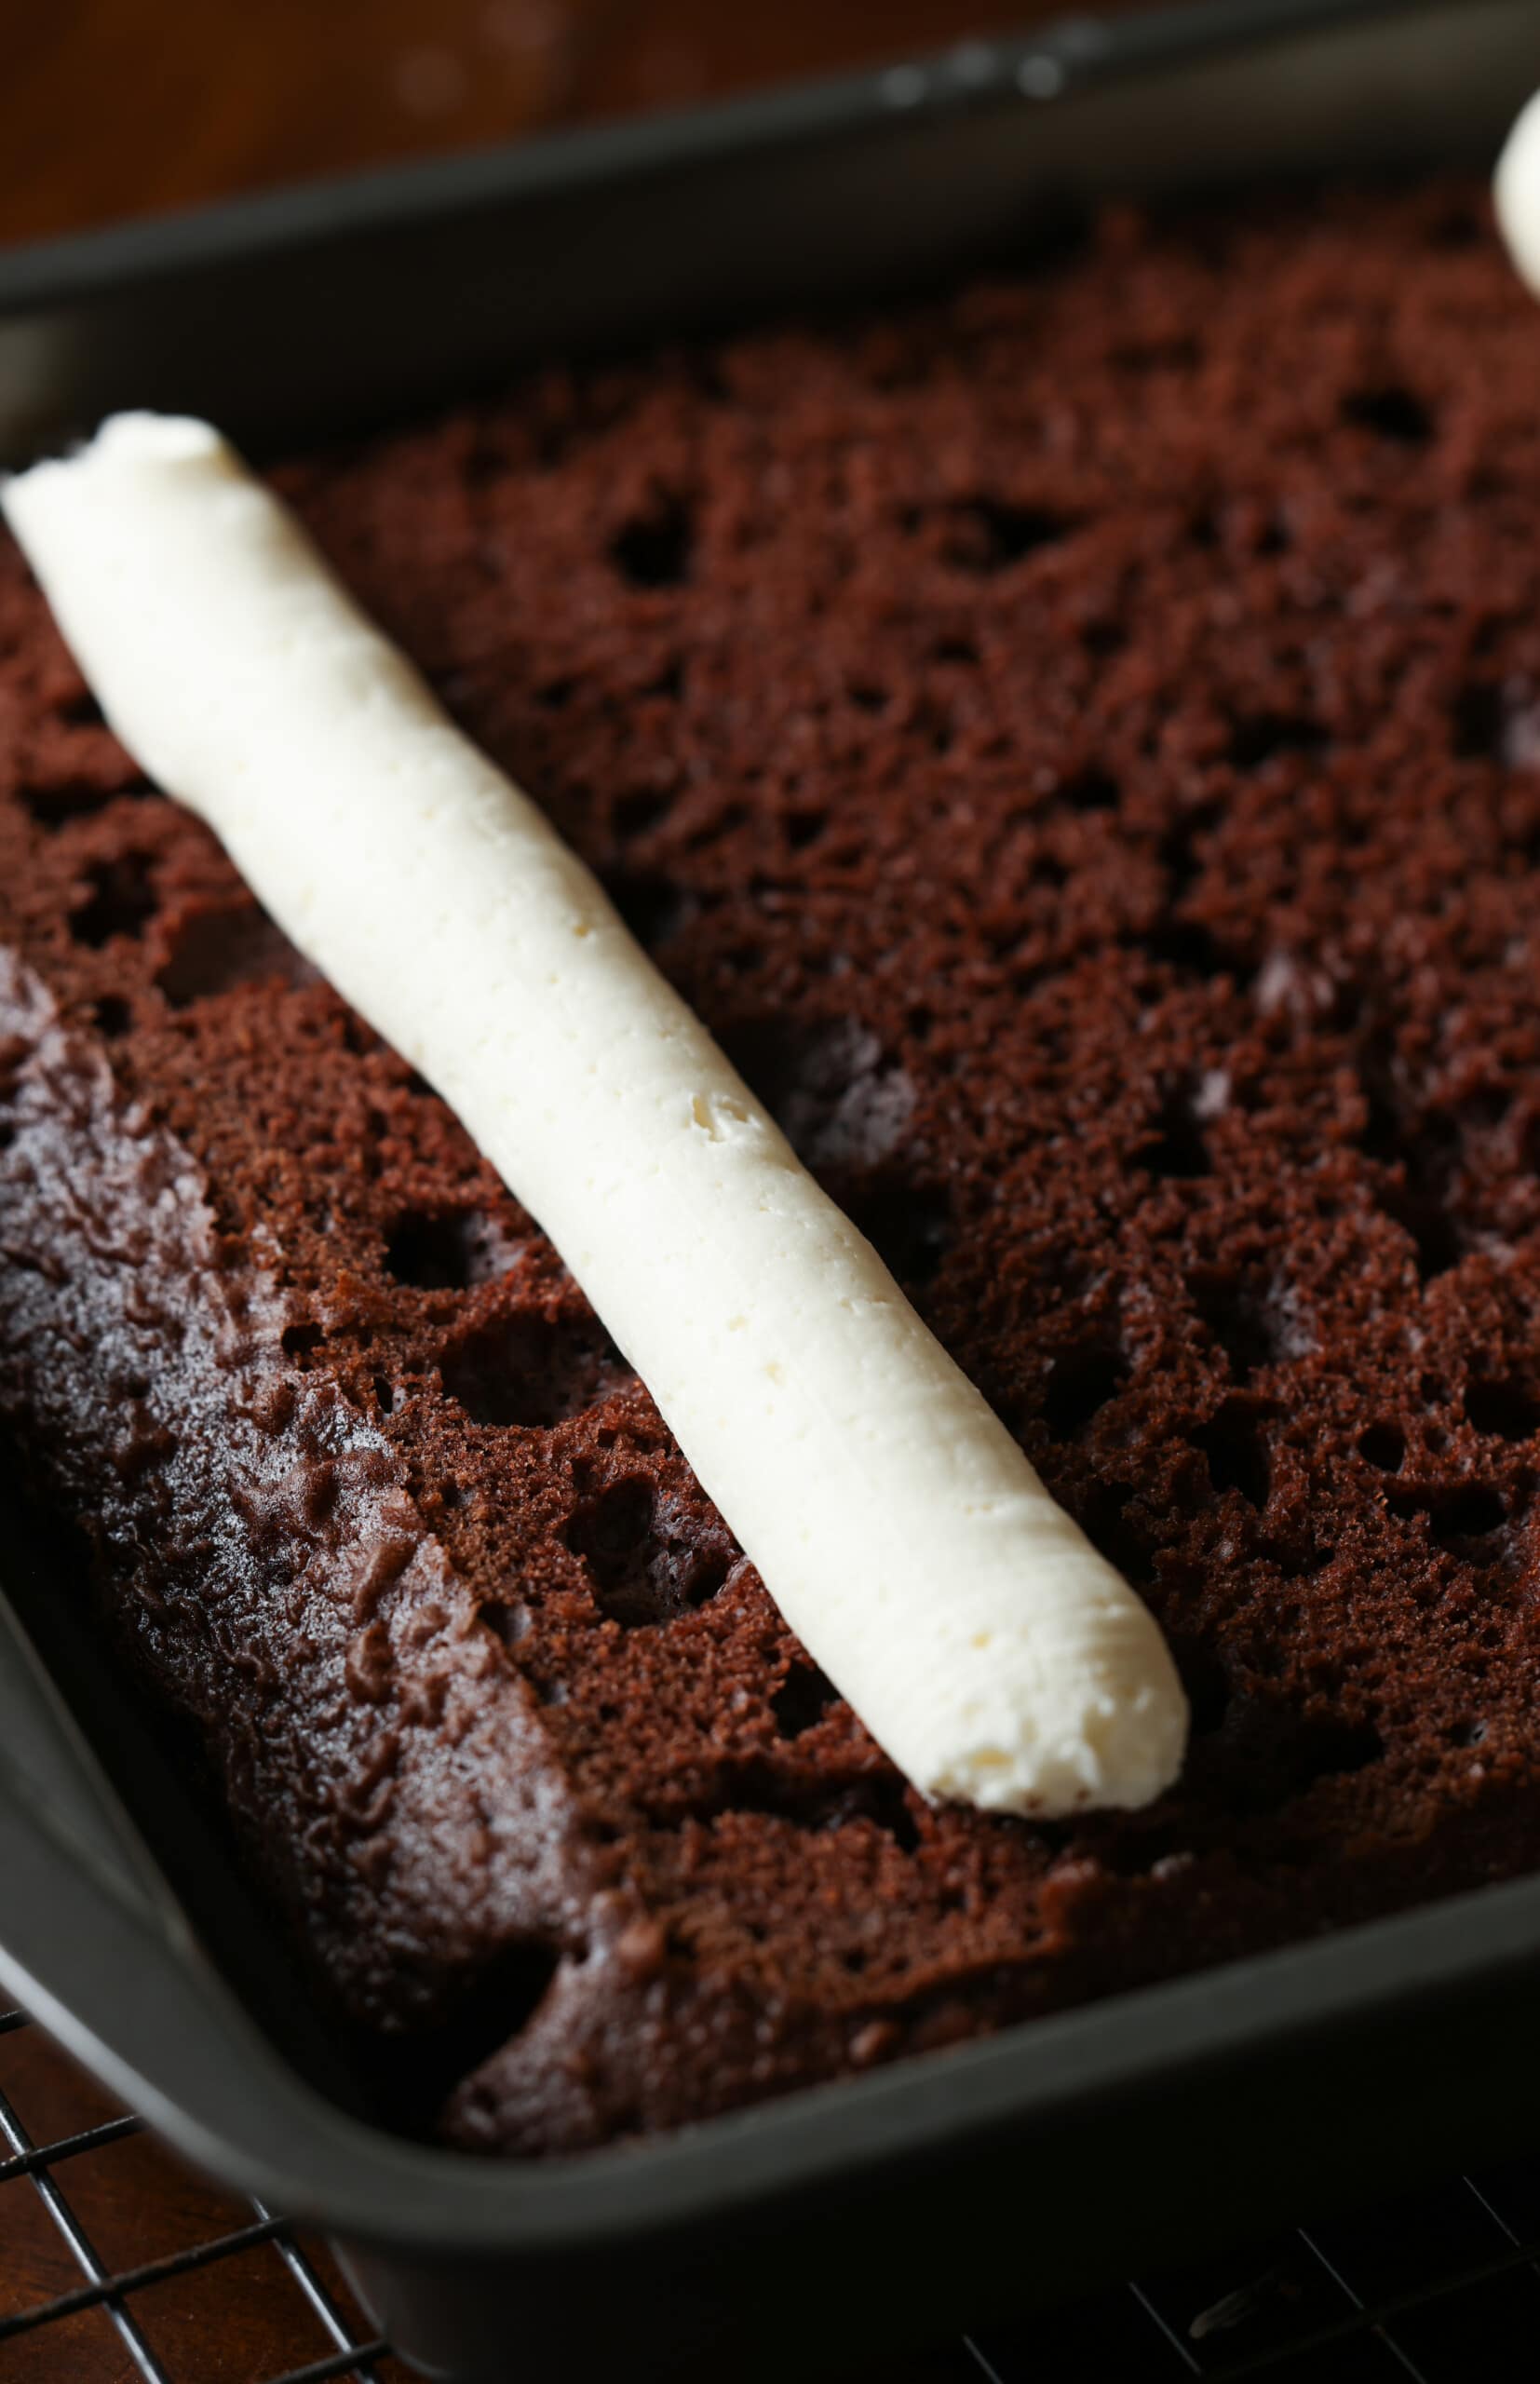 A tube of vanilla icing on chocolate cake